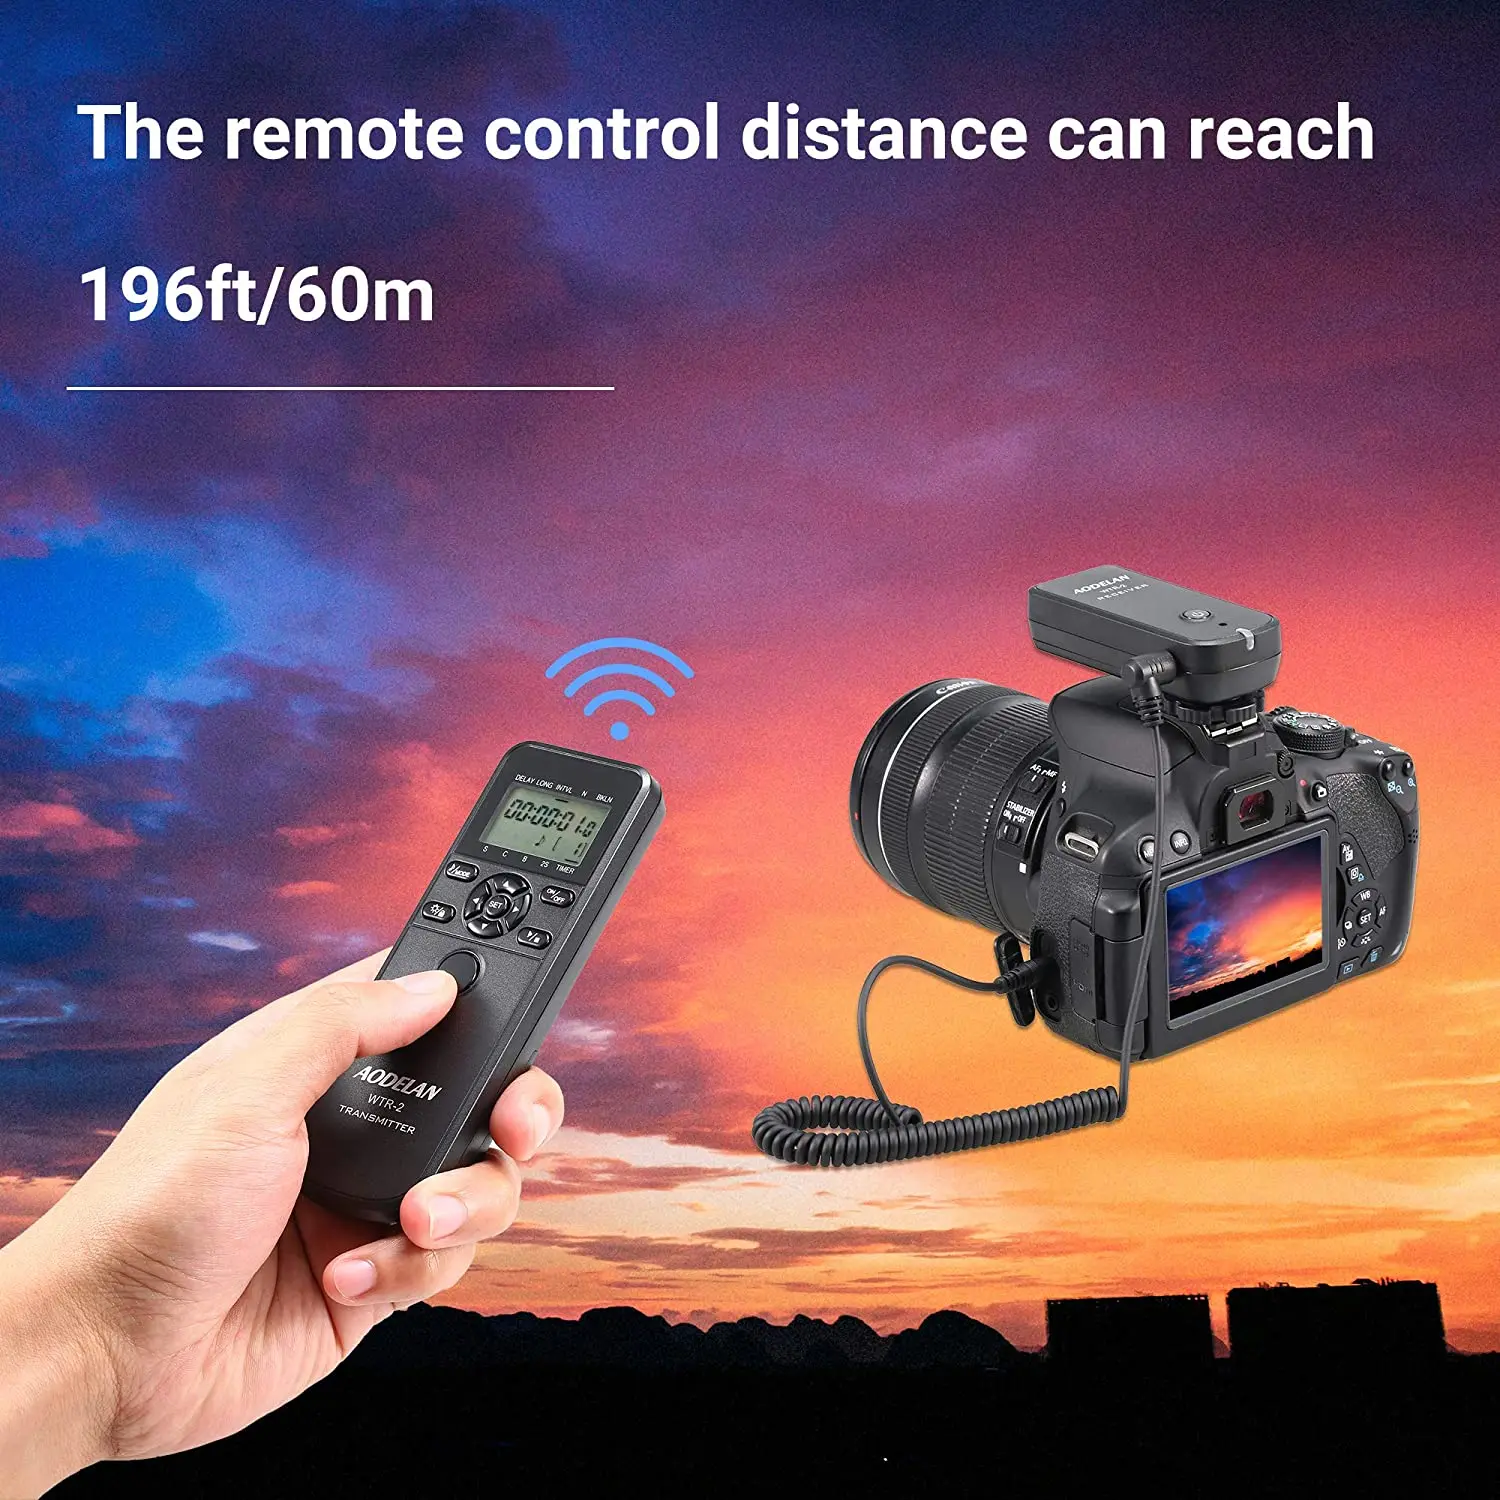 

AODELAN WTR-2 Wireless Timer Lapse Intervalometer Remote Control Shutter Release For Canon Nikon Sony Panasonic Fujifilm Cameras